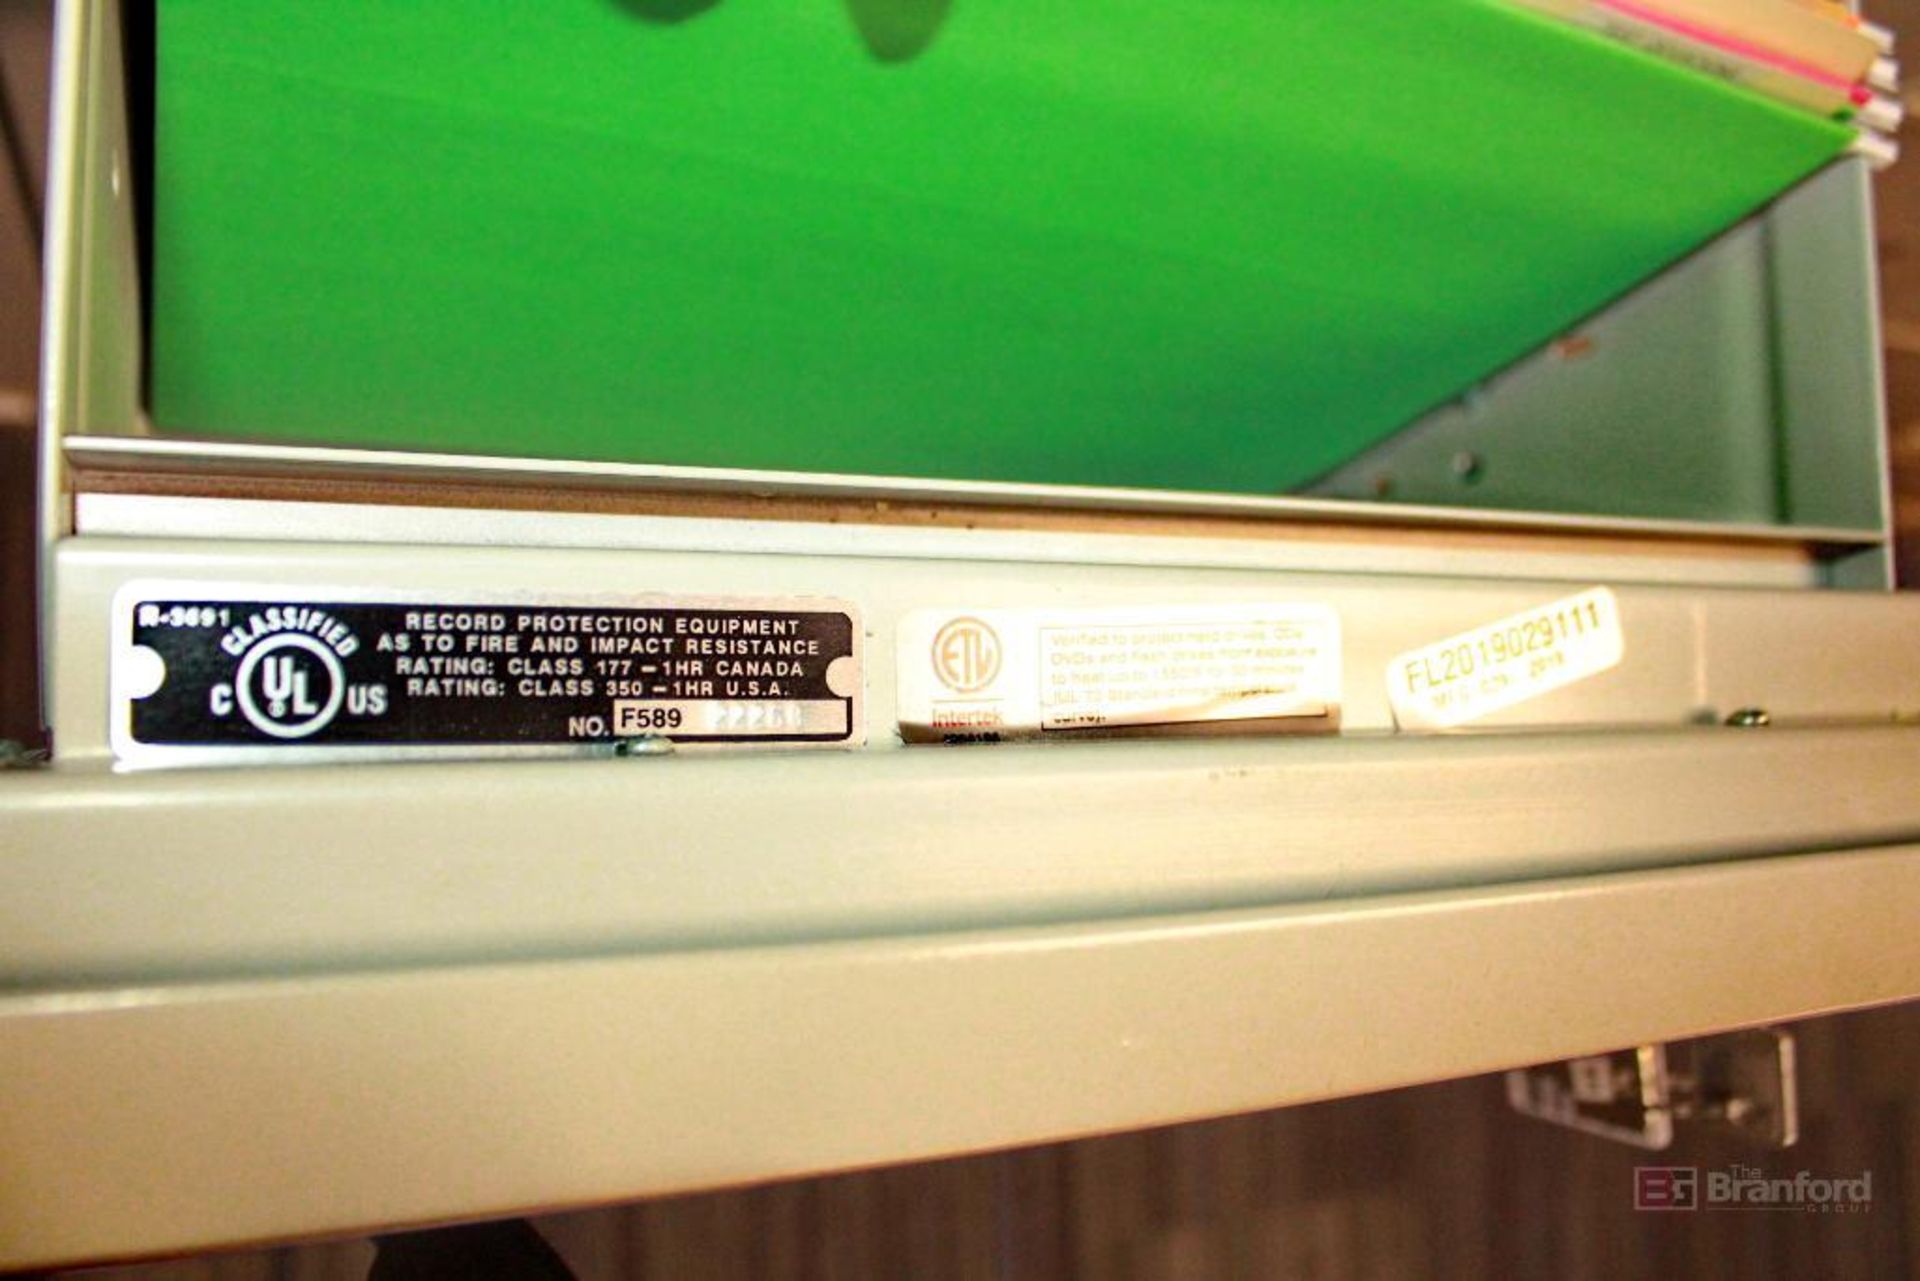 FireKingTurtle Series 4-Drawer Fireproof Vertical R-3691 File Cabinet - Image 3 of 3